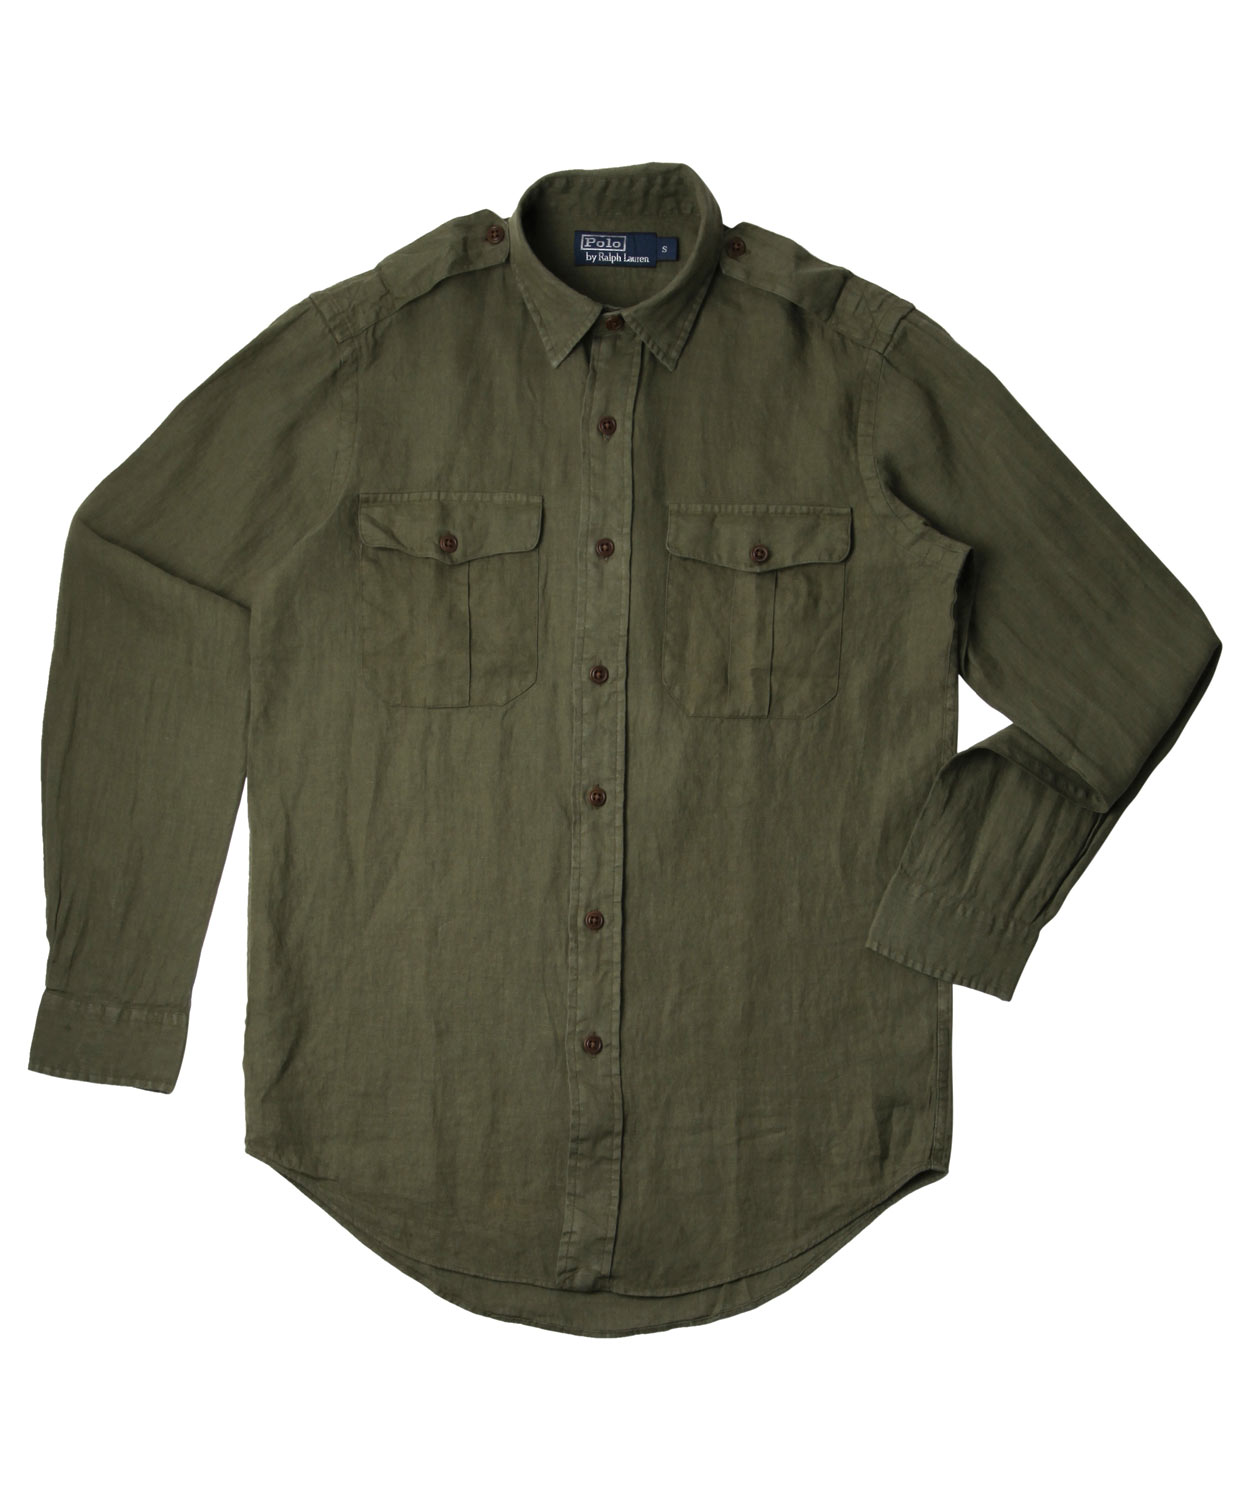 Lyst - Polo Ralph Lauren Olive Linen Shirt in Green for Men